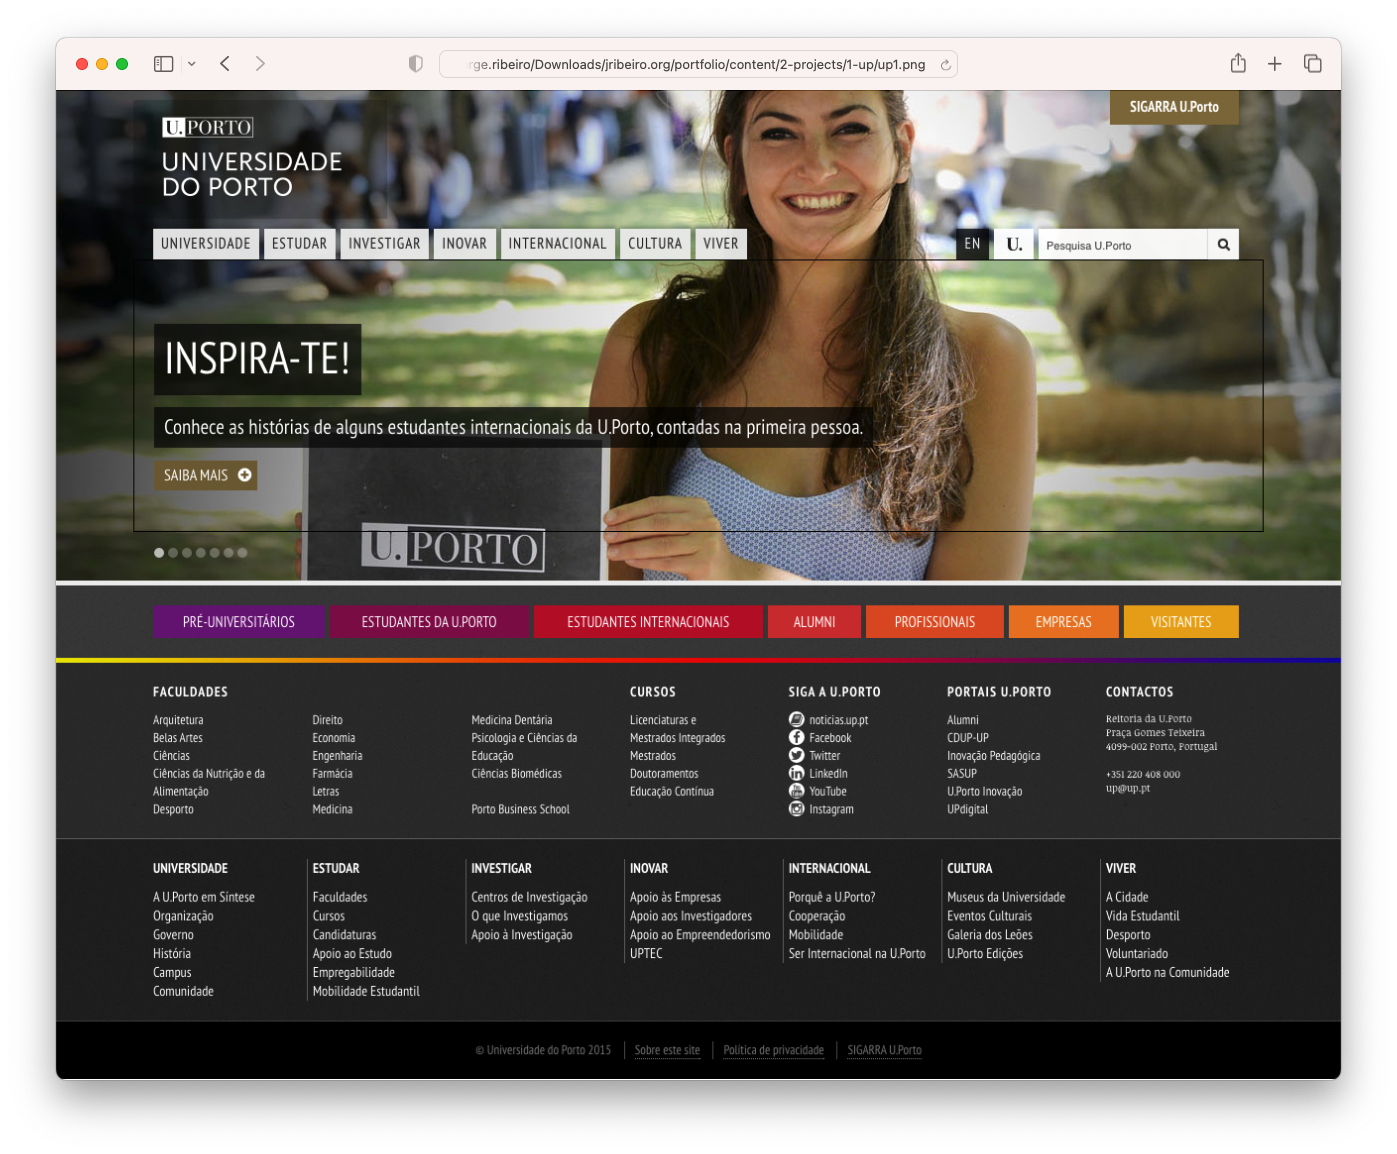 University of Porto website